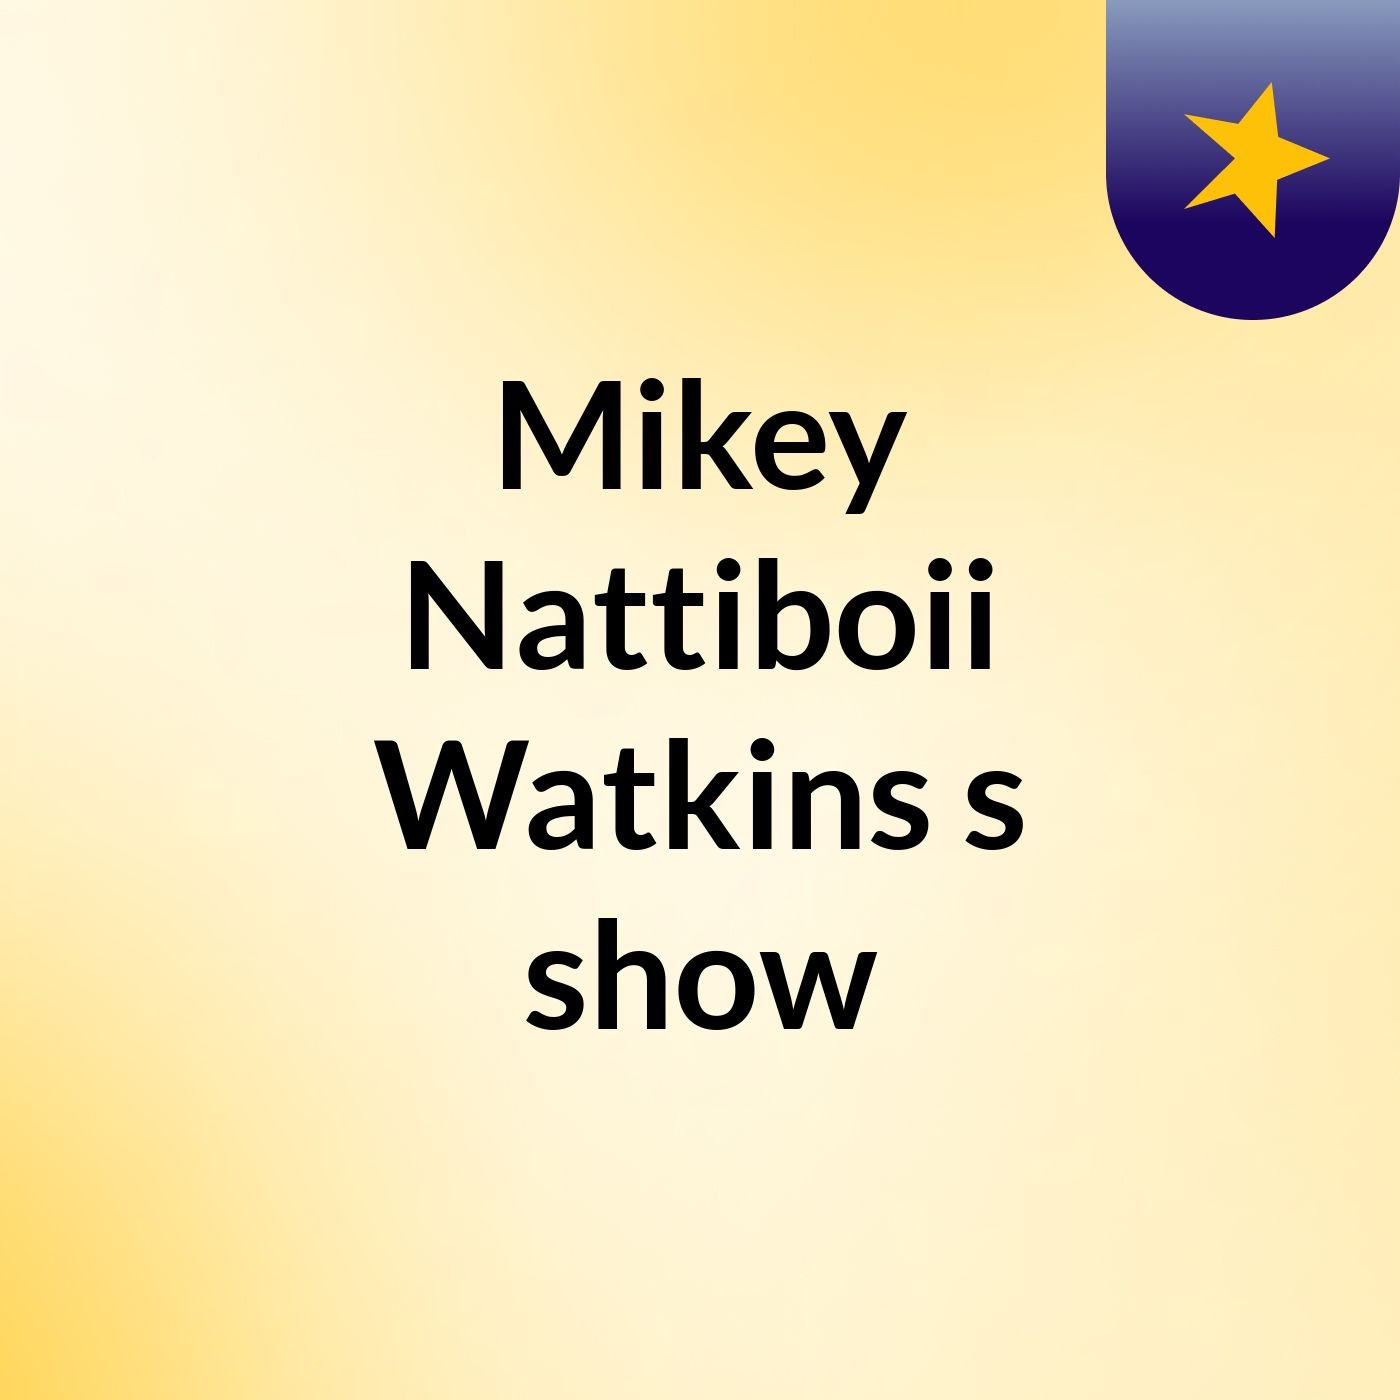 Mikey Nattiboii Watkins's show